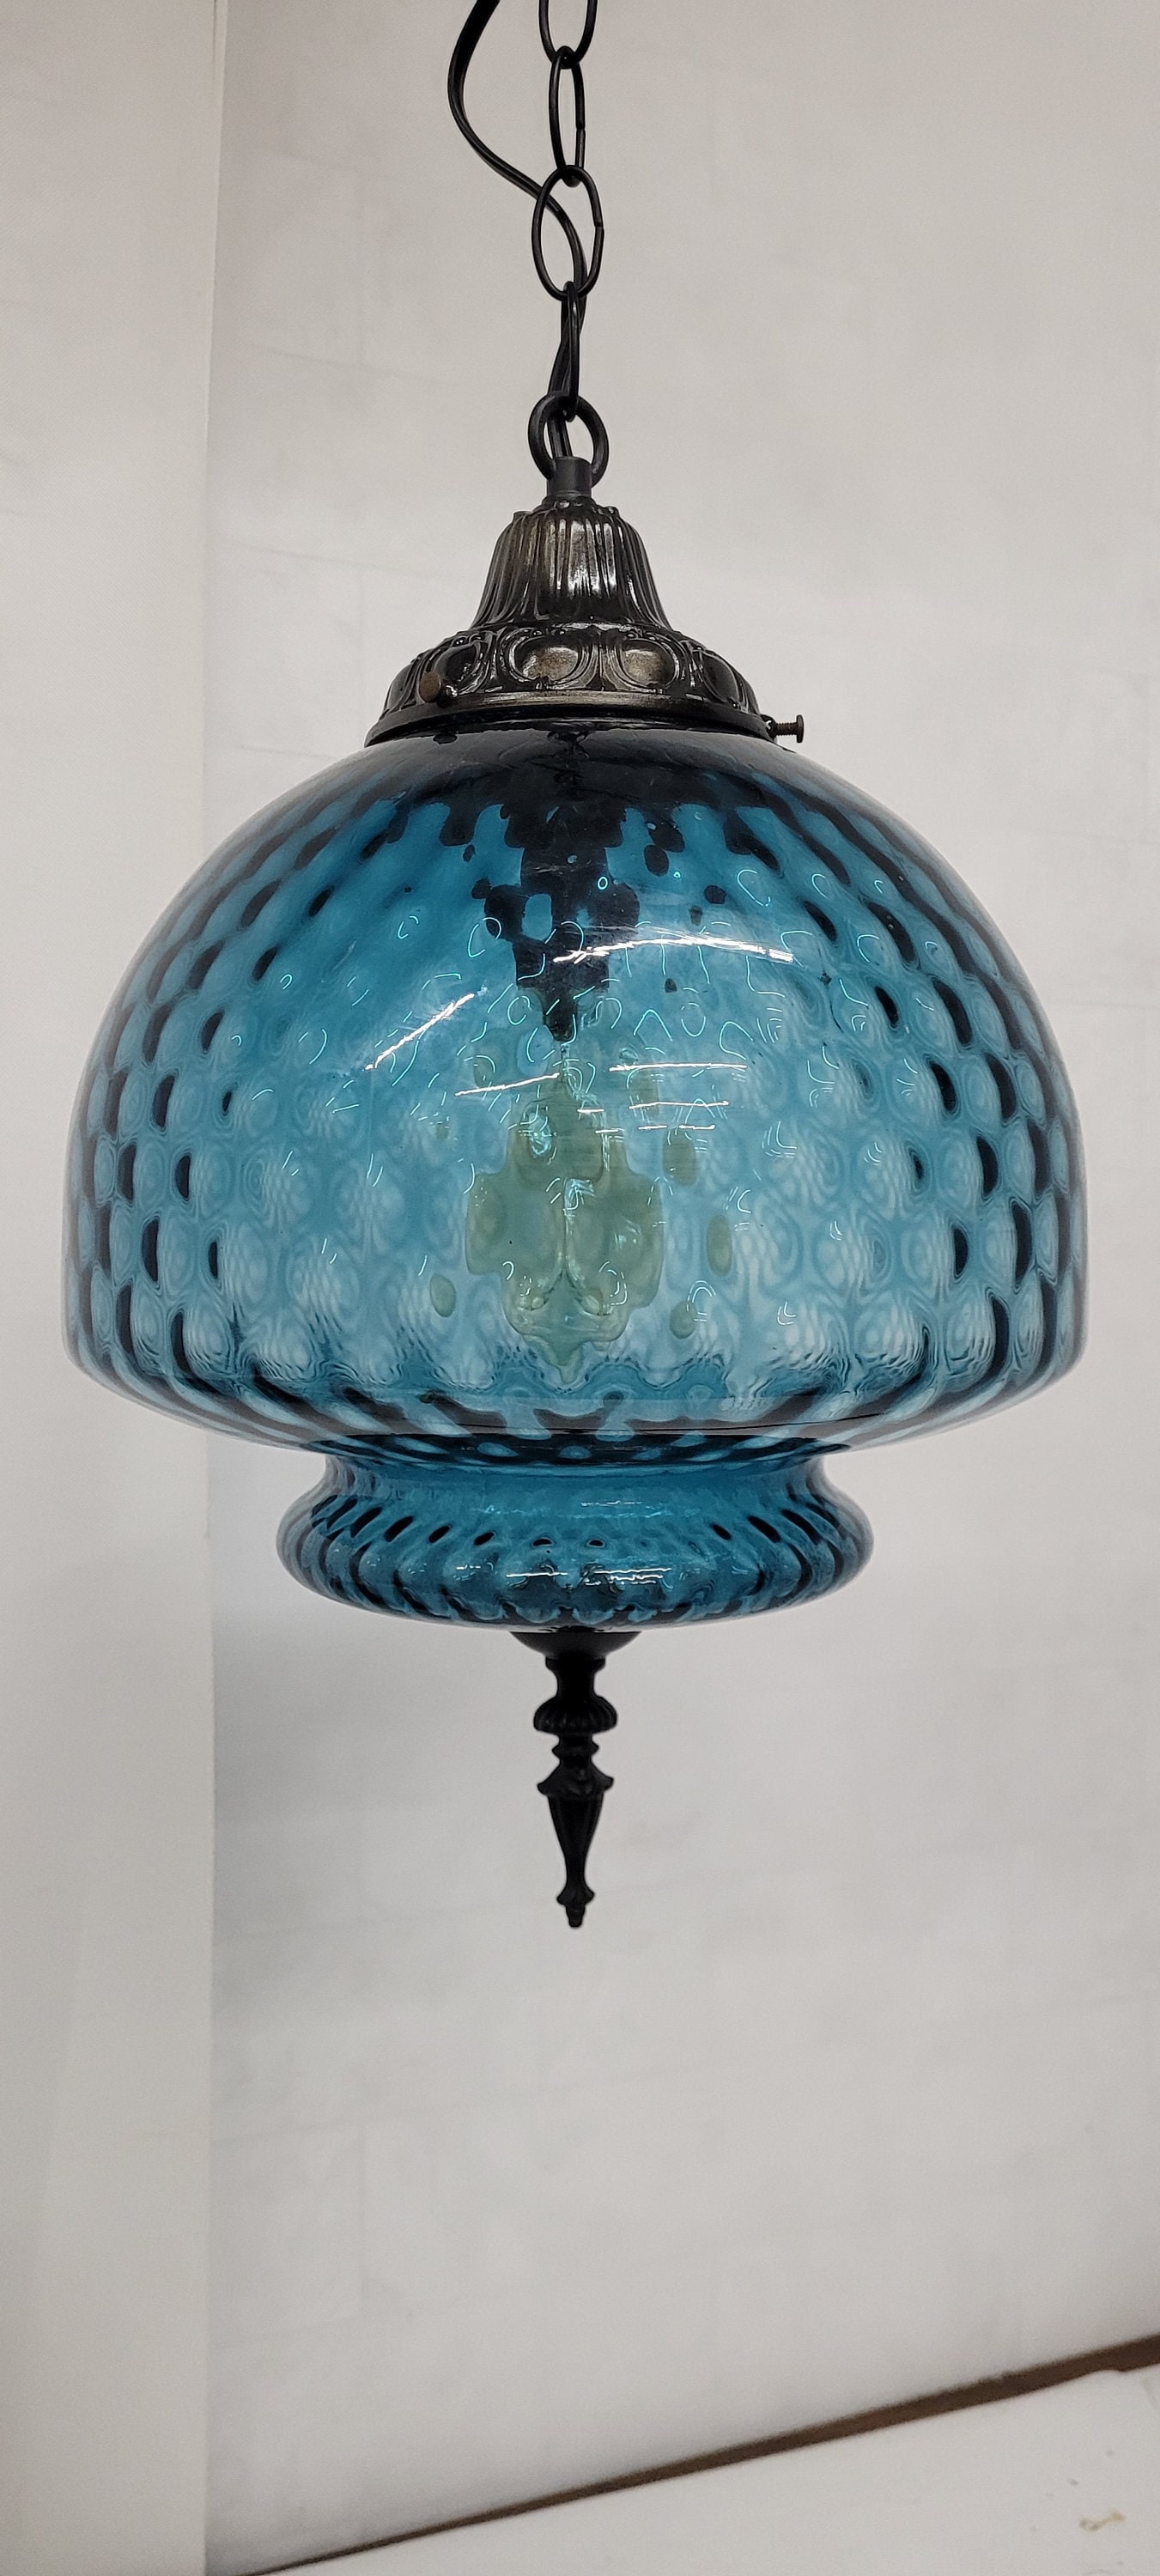 Vintage blue swag lamp tear drop shaped art glass hanging light plug in wall